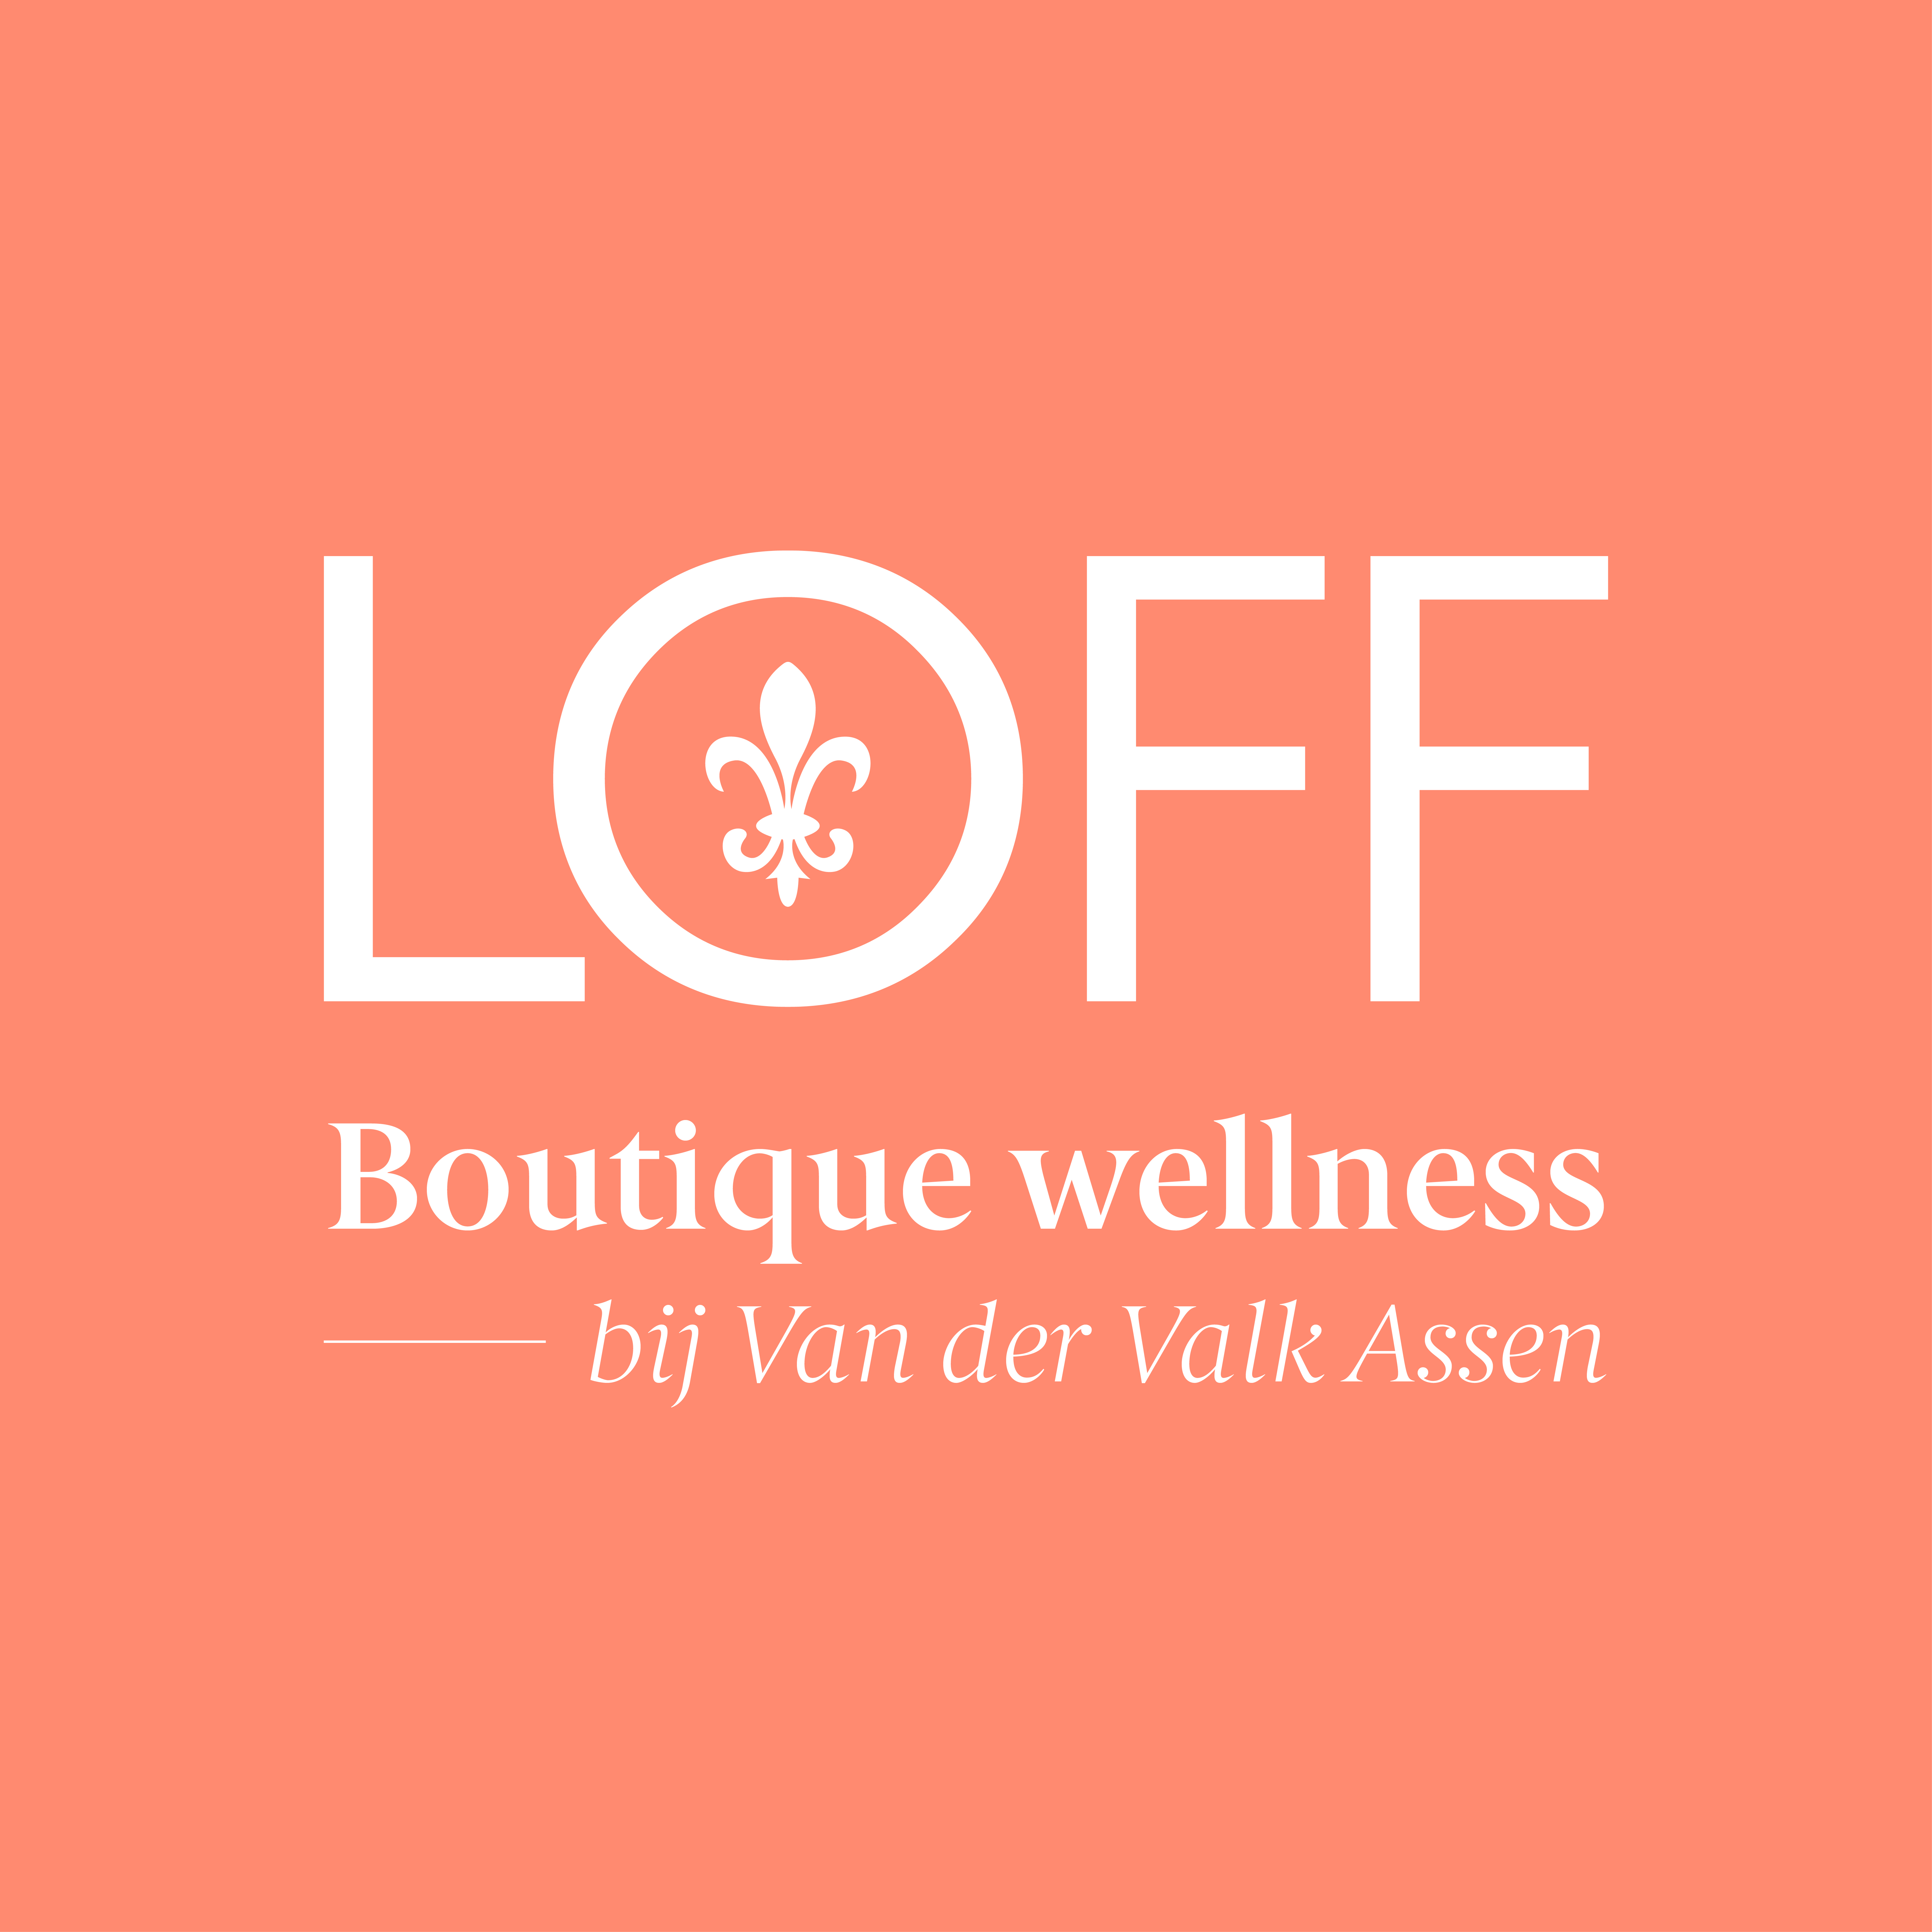 LOFF Boutique wellness